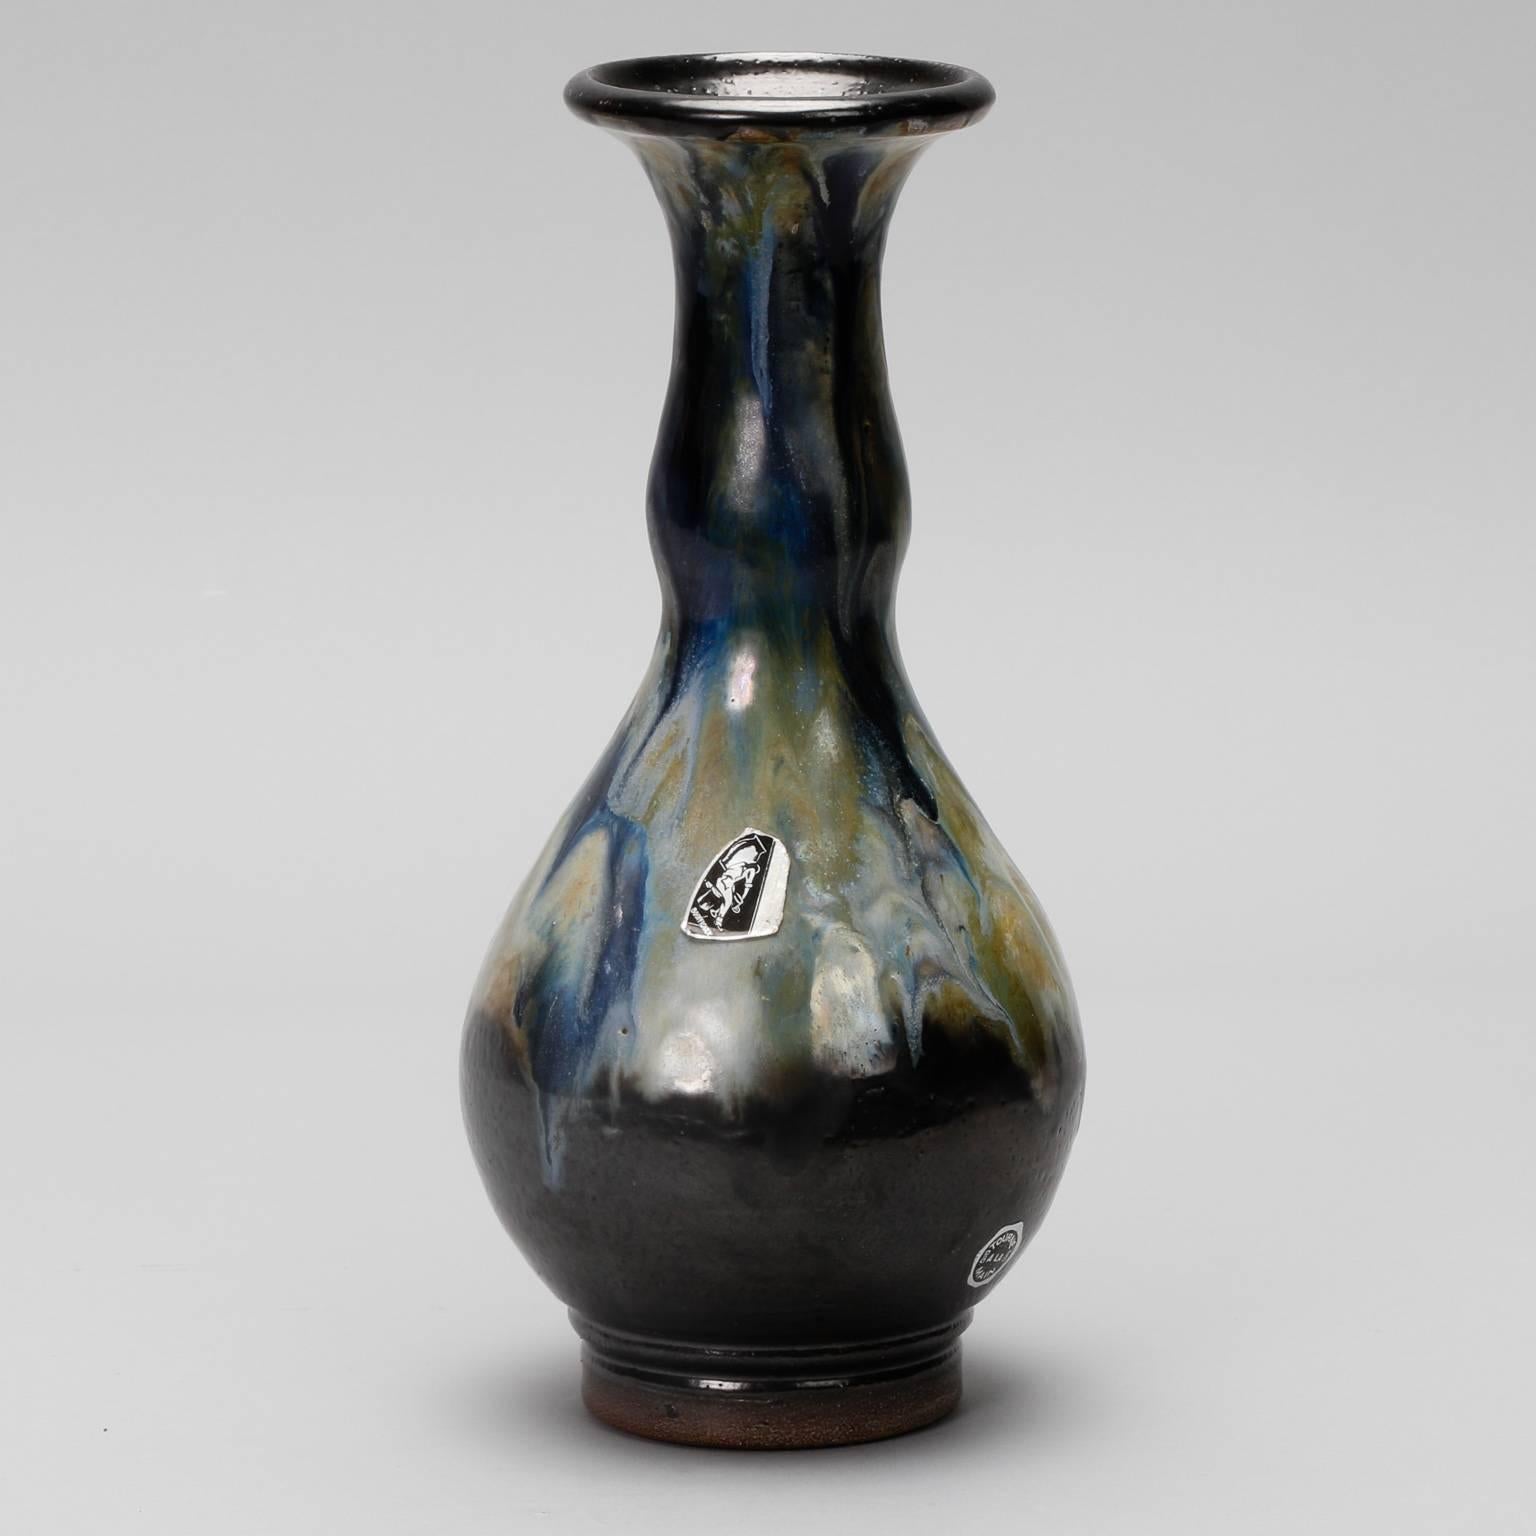 Slender vase signed by reknown Belgian ceramic artist Roger Guerin, circa 1930s. Mottled drip glaze in shades of blue, ochre and black. Original label still affixed.